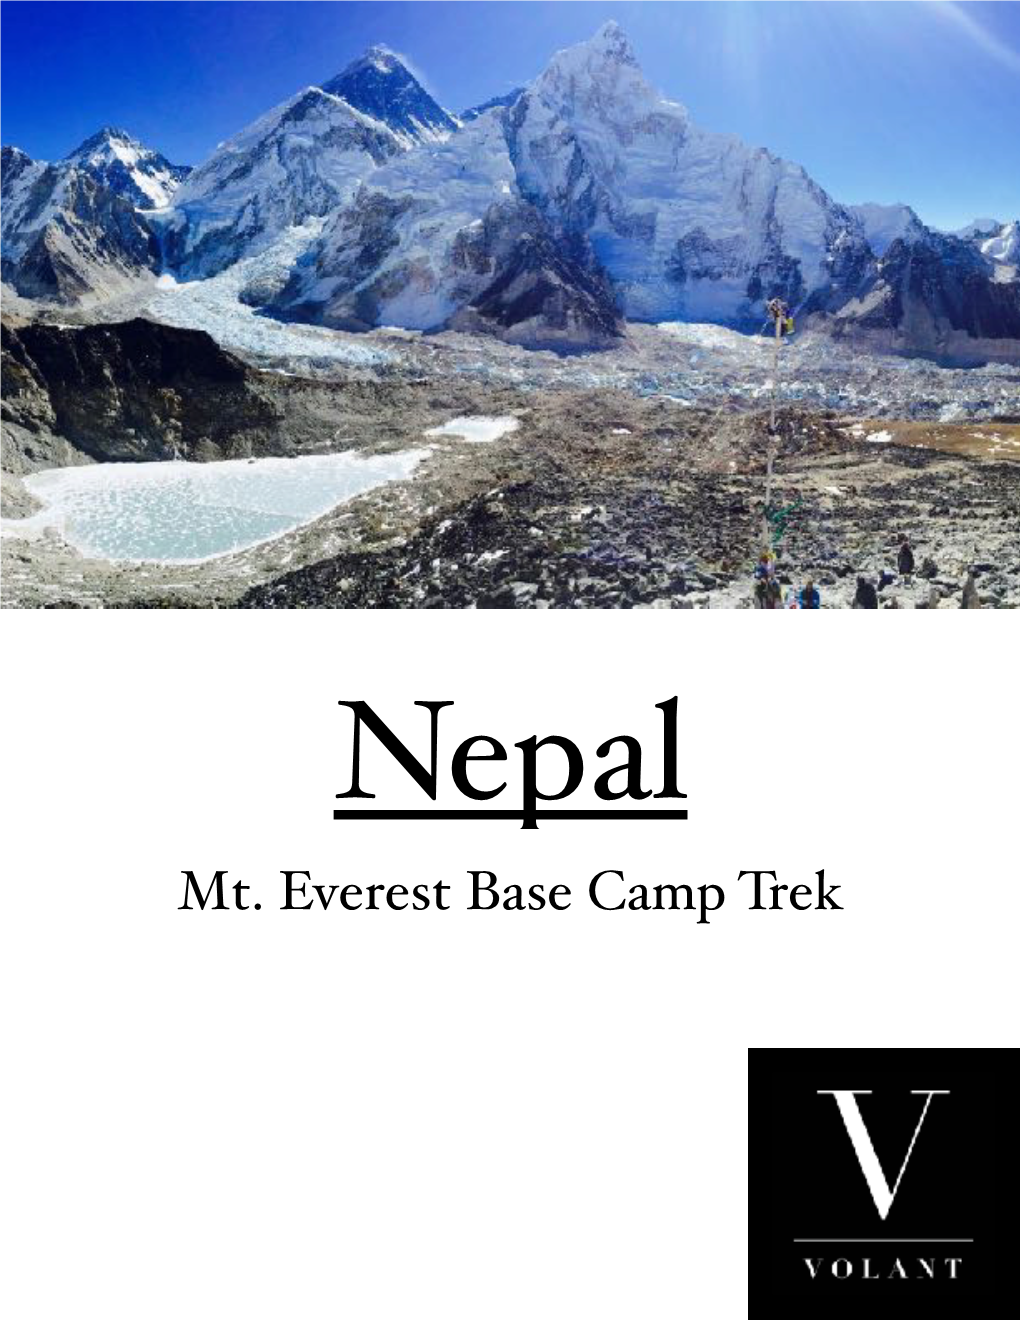 Nepal Everest Base Camp Trek Trip Packet